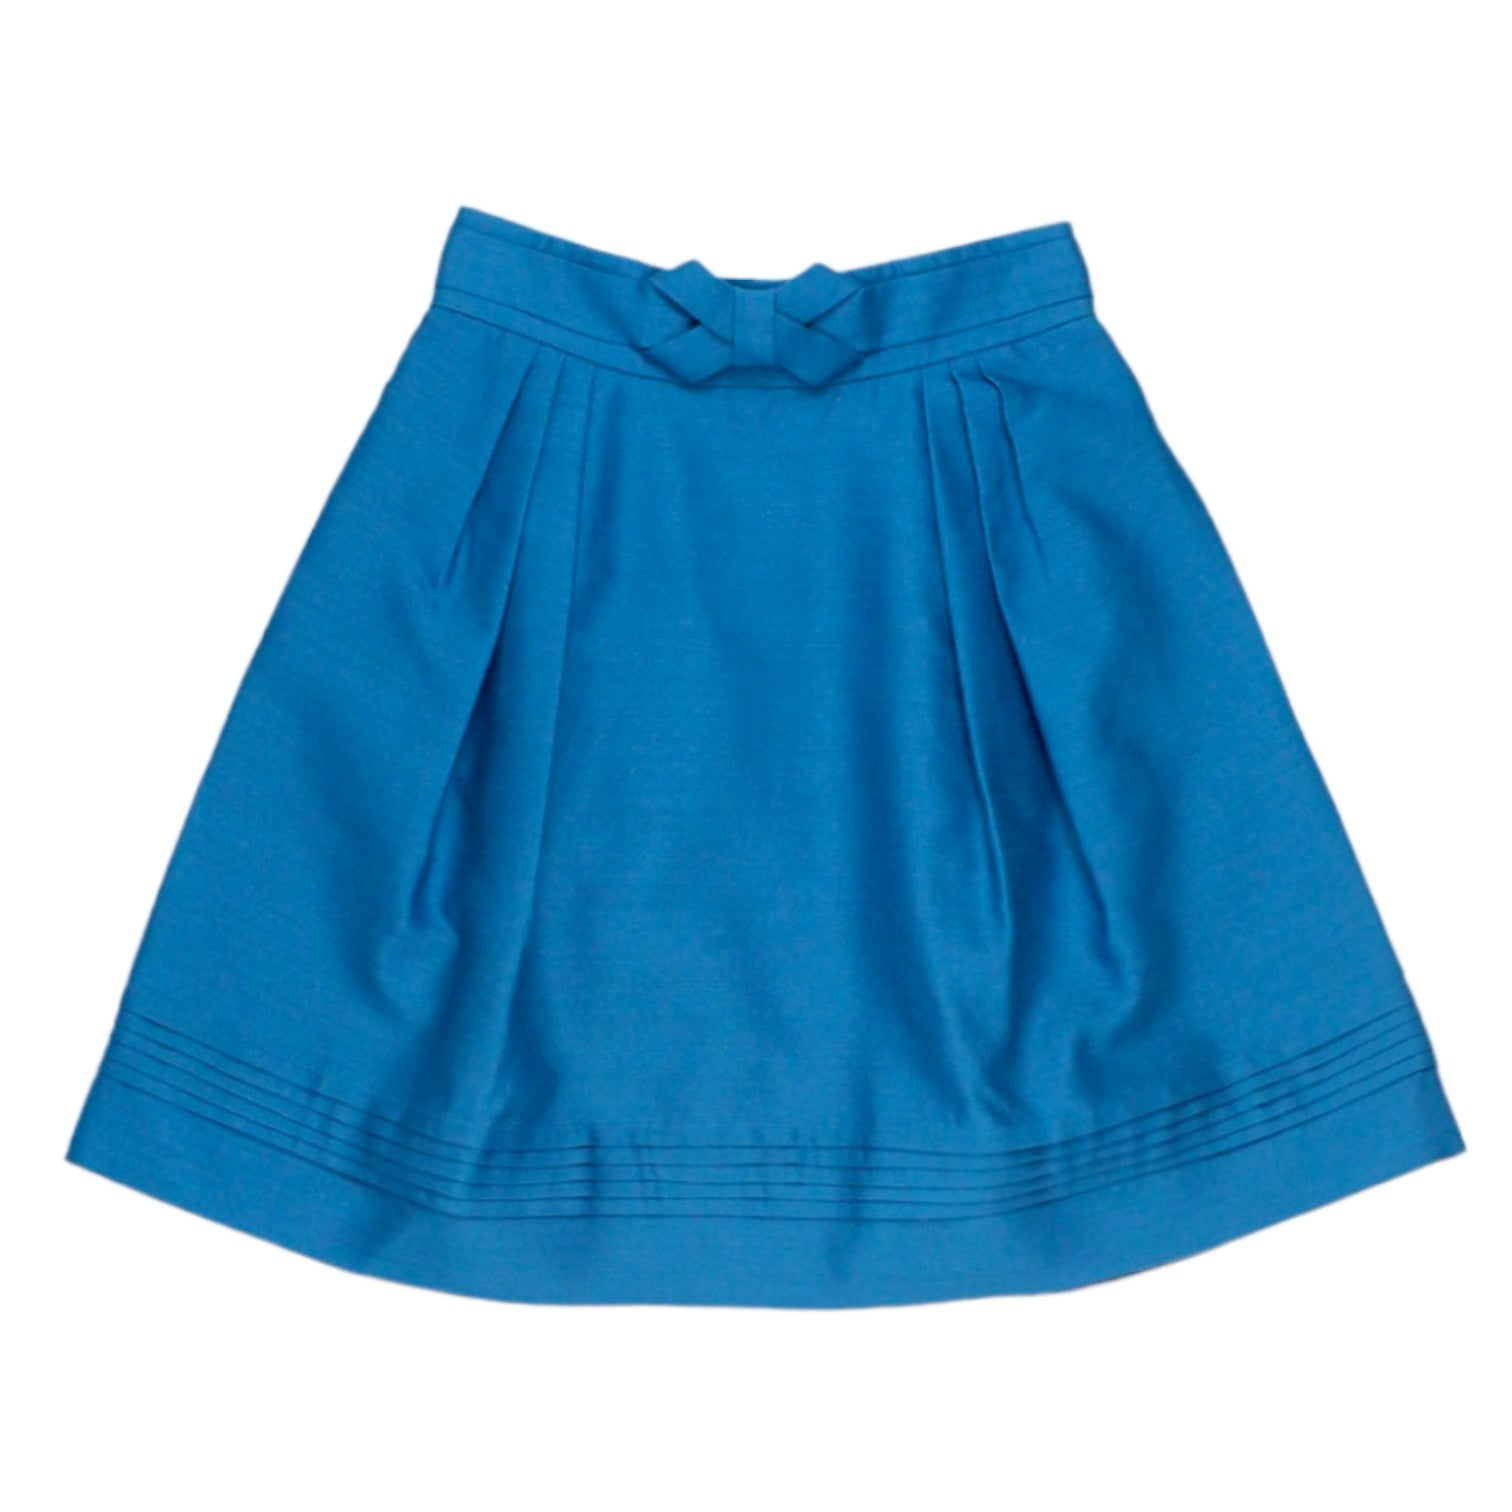 Orla Kiely Blue Organza Mini Skirt